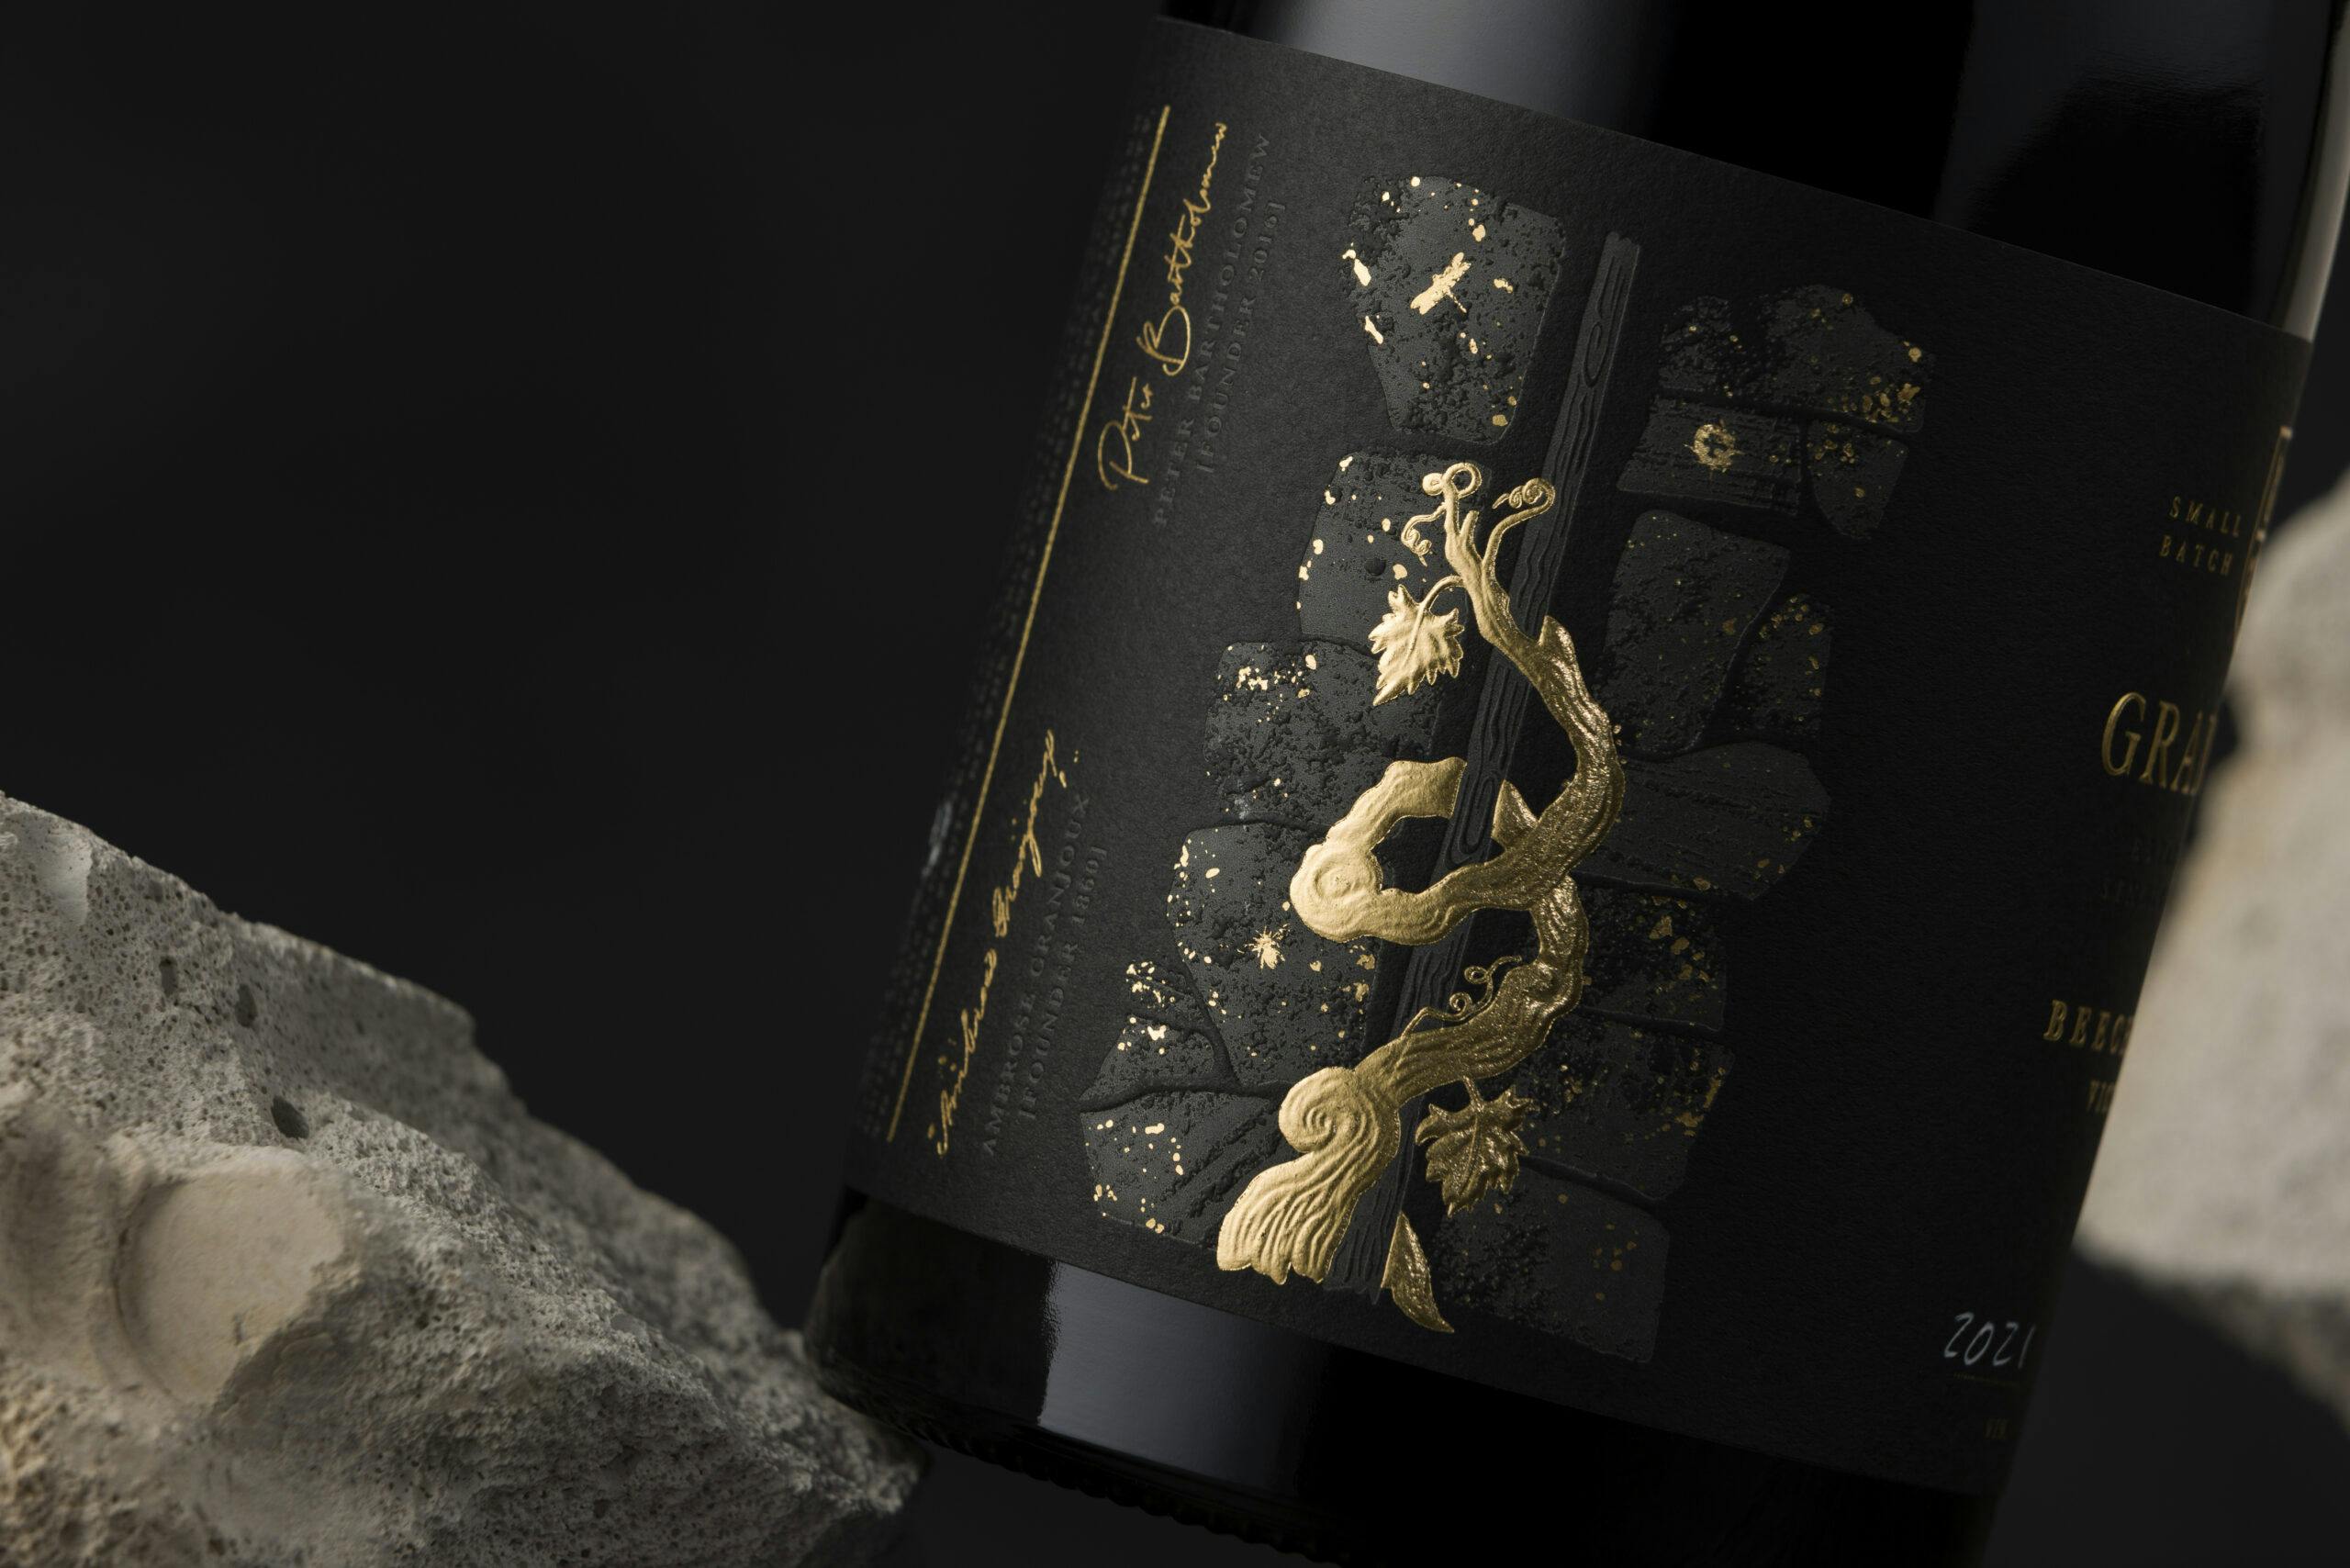 Image of Premium textural wine label tells story of Granjoux